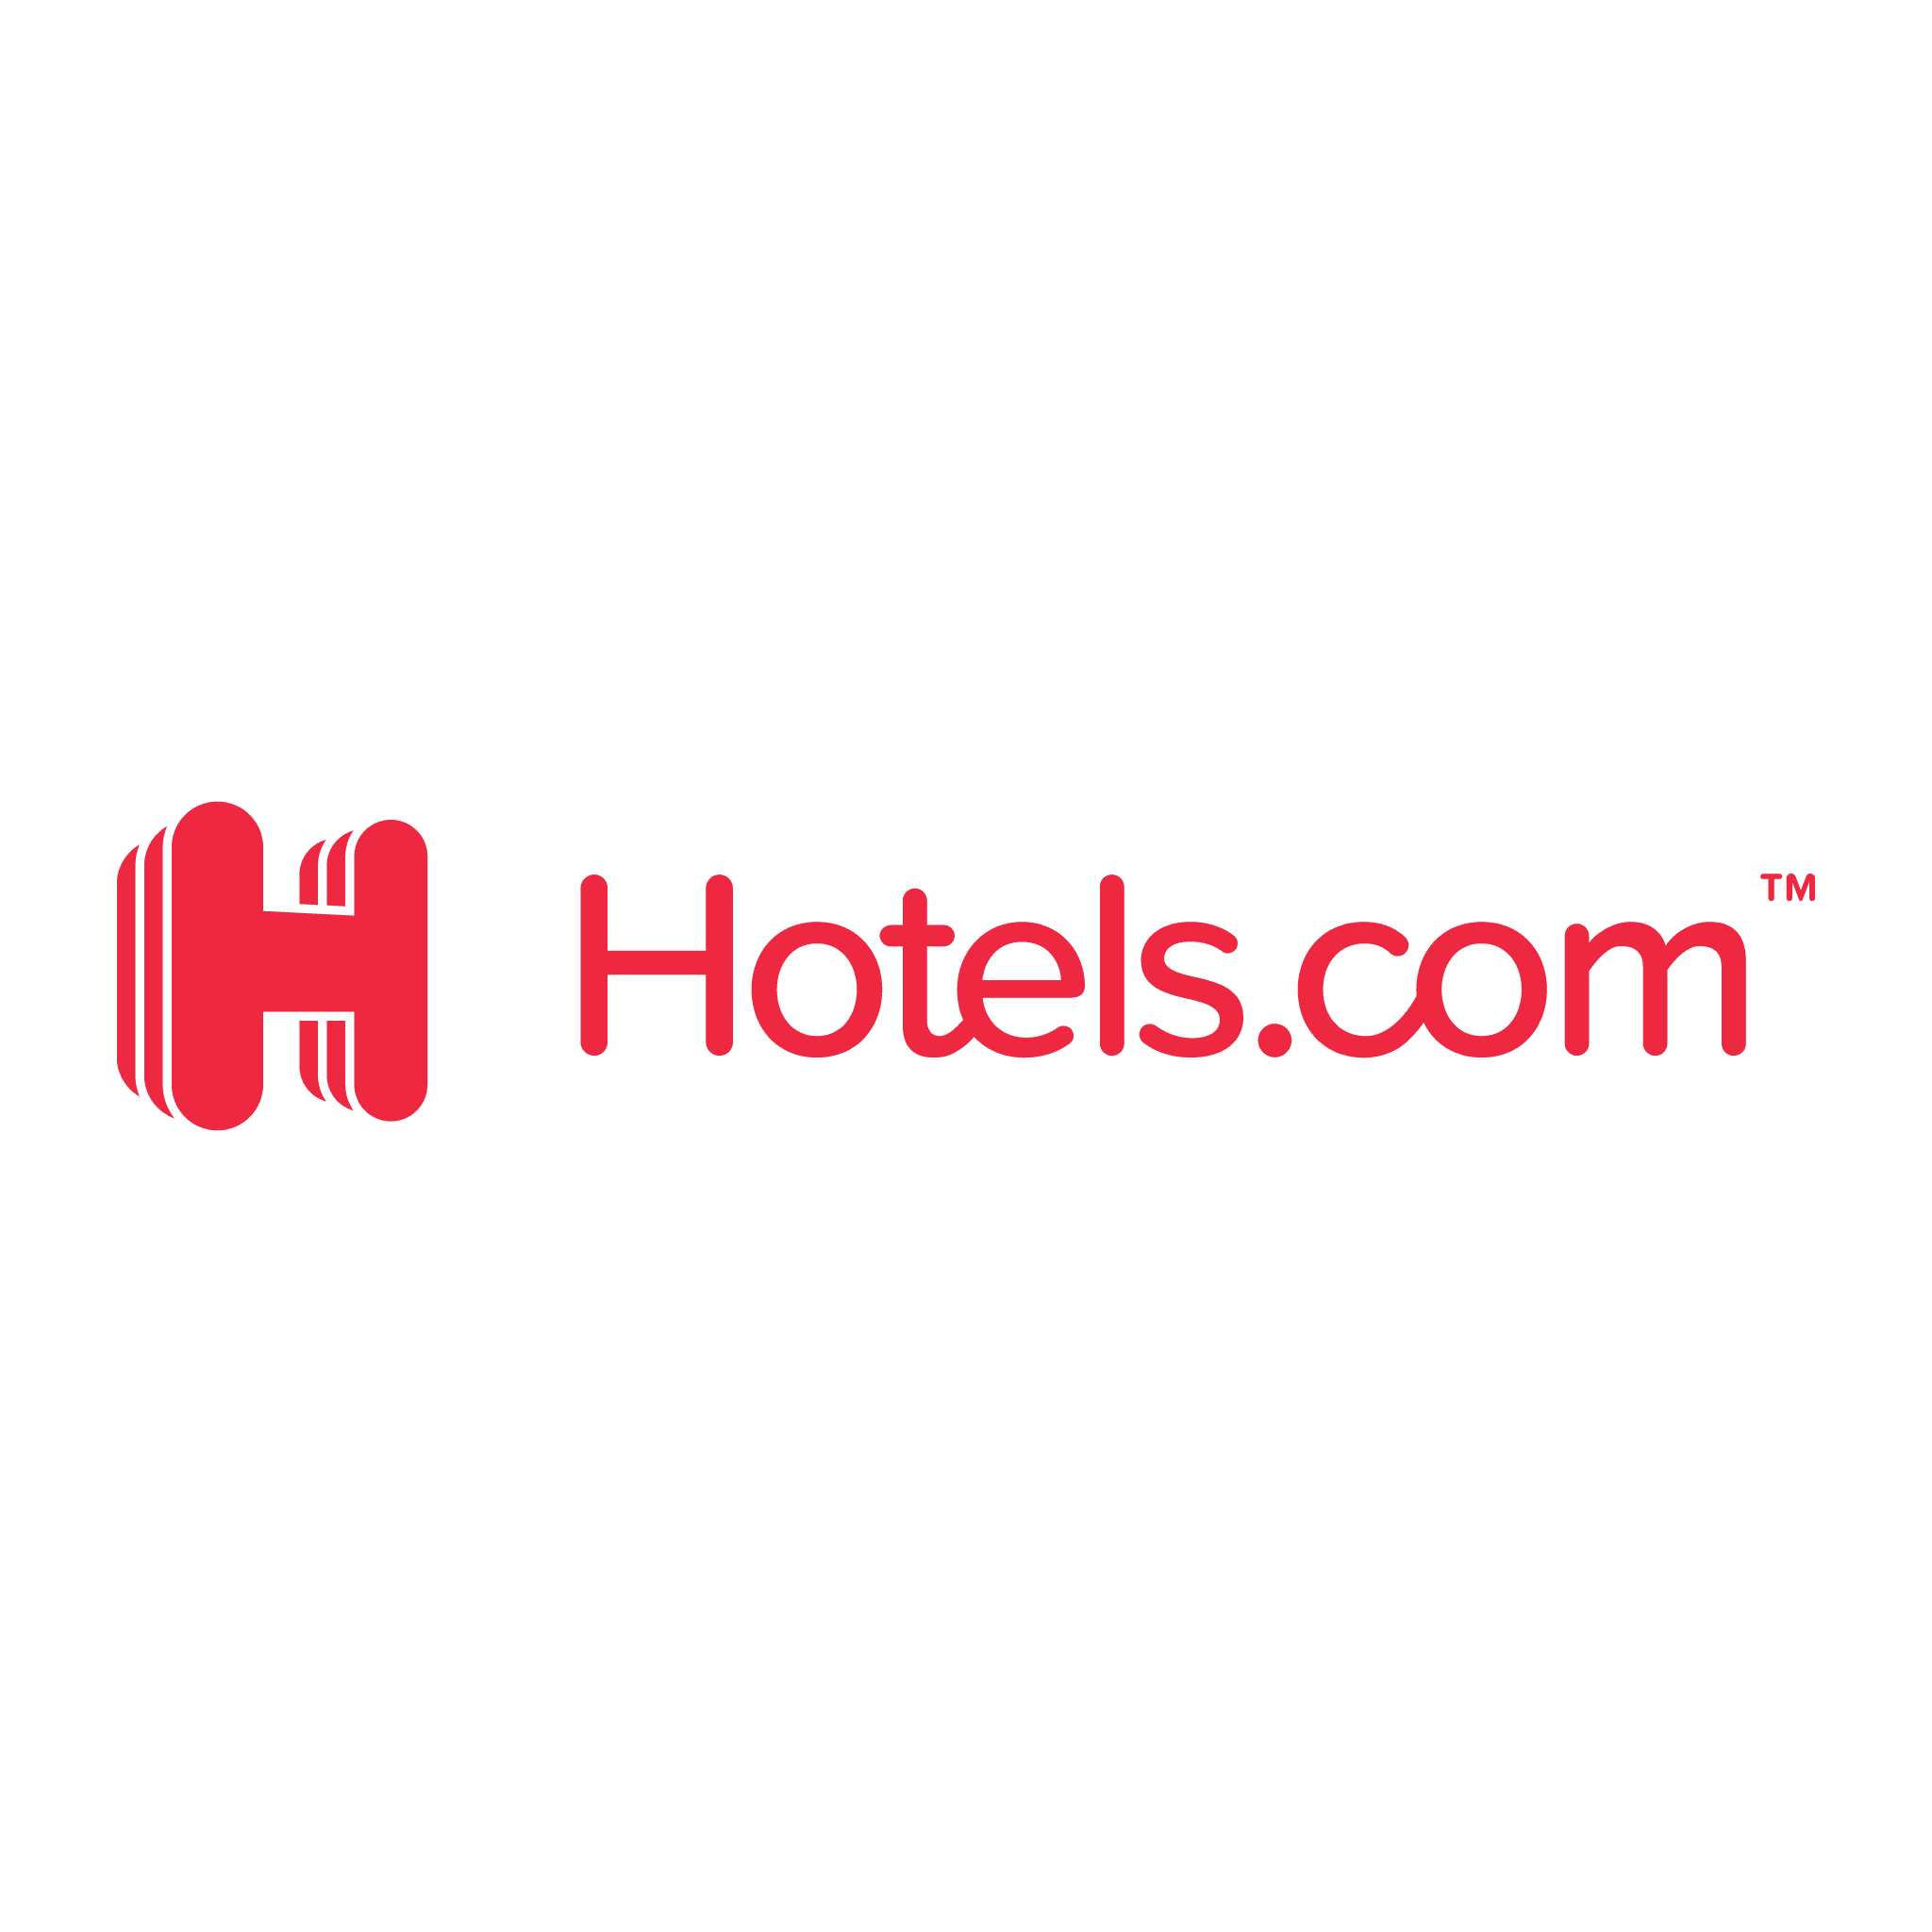 logo hotels.com